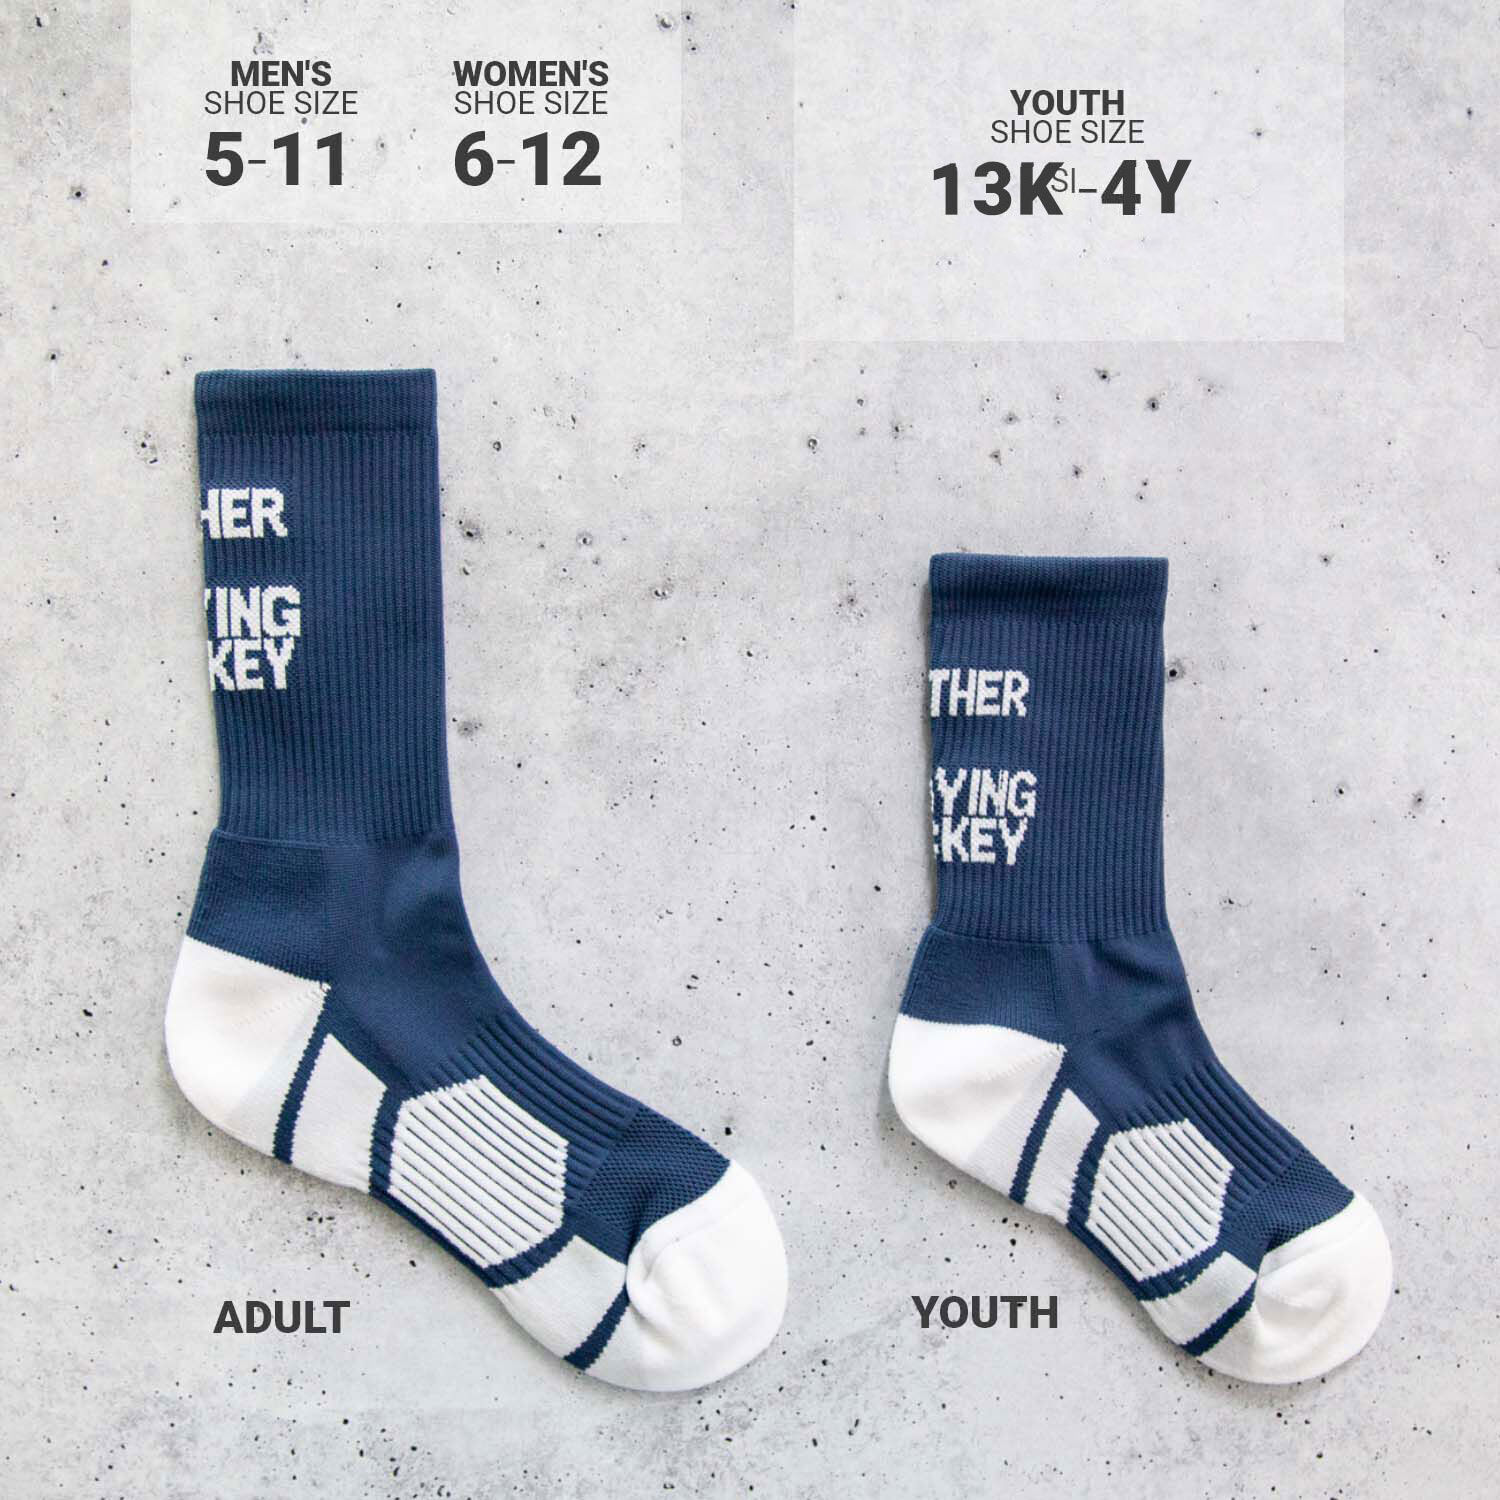 Softball Women's Youth Socks Small Fits Ladies Shoe Size 4-5 Youth Shoe 12-4 